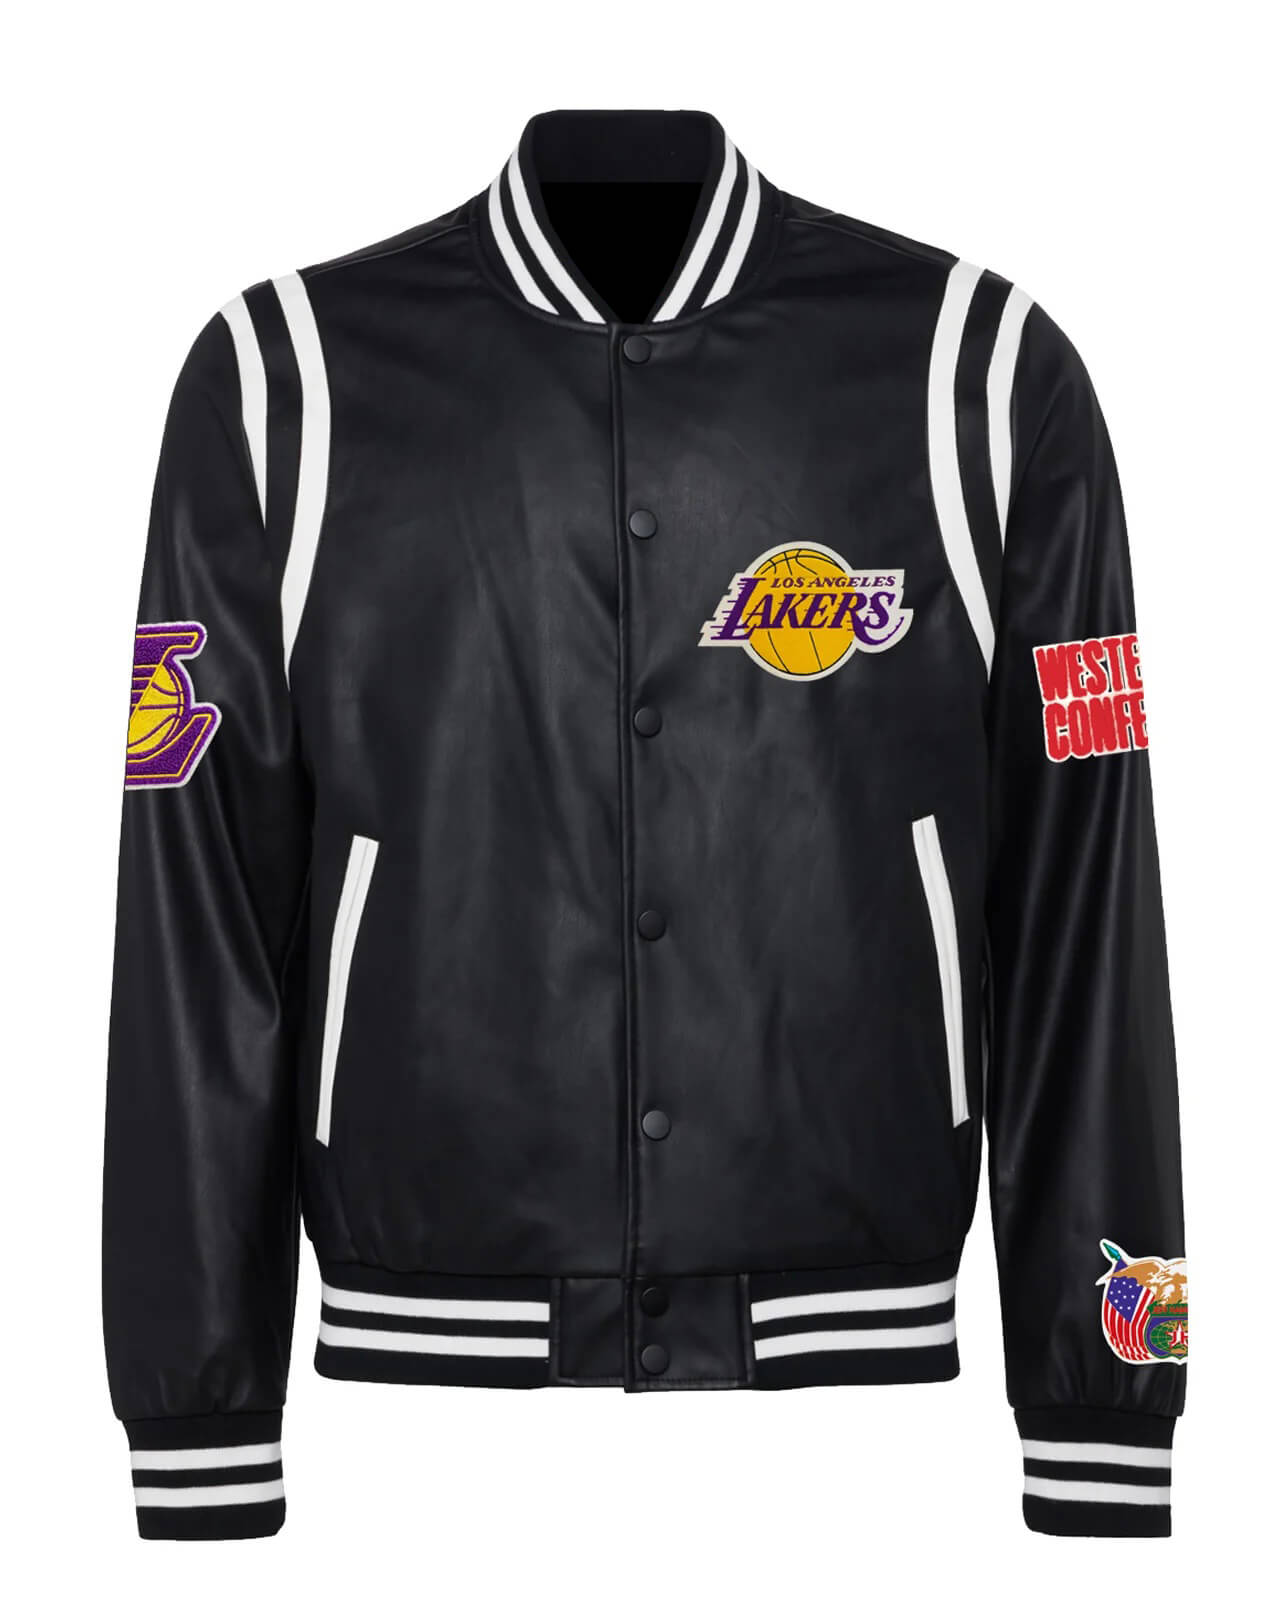 Black White LA Lakers NBA Team Leather Jacket - Maker of Jacket